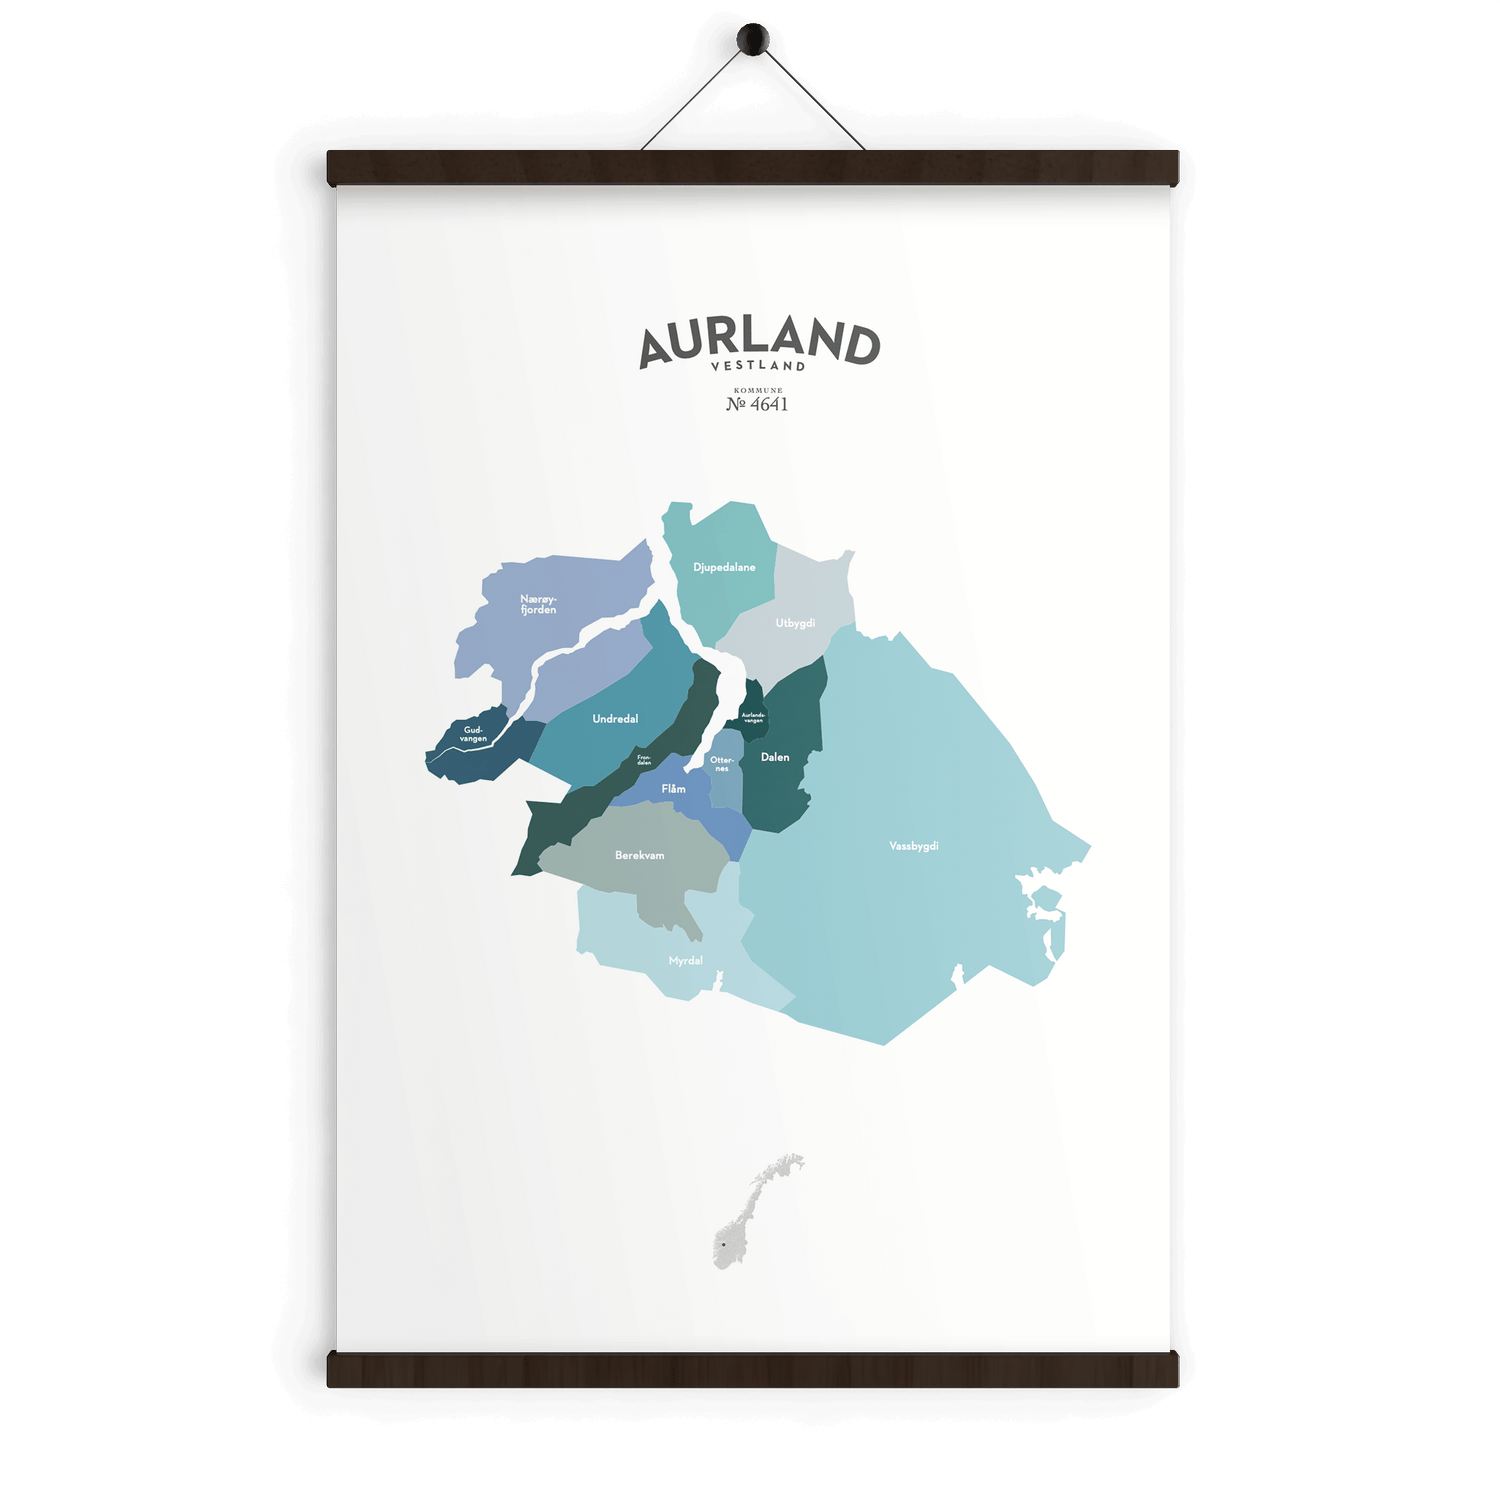 Aurland